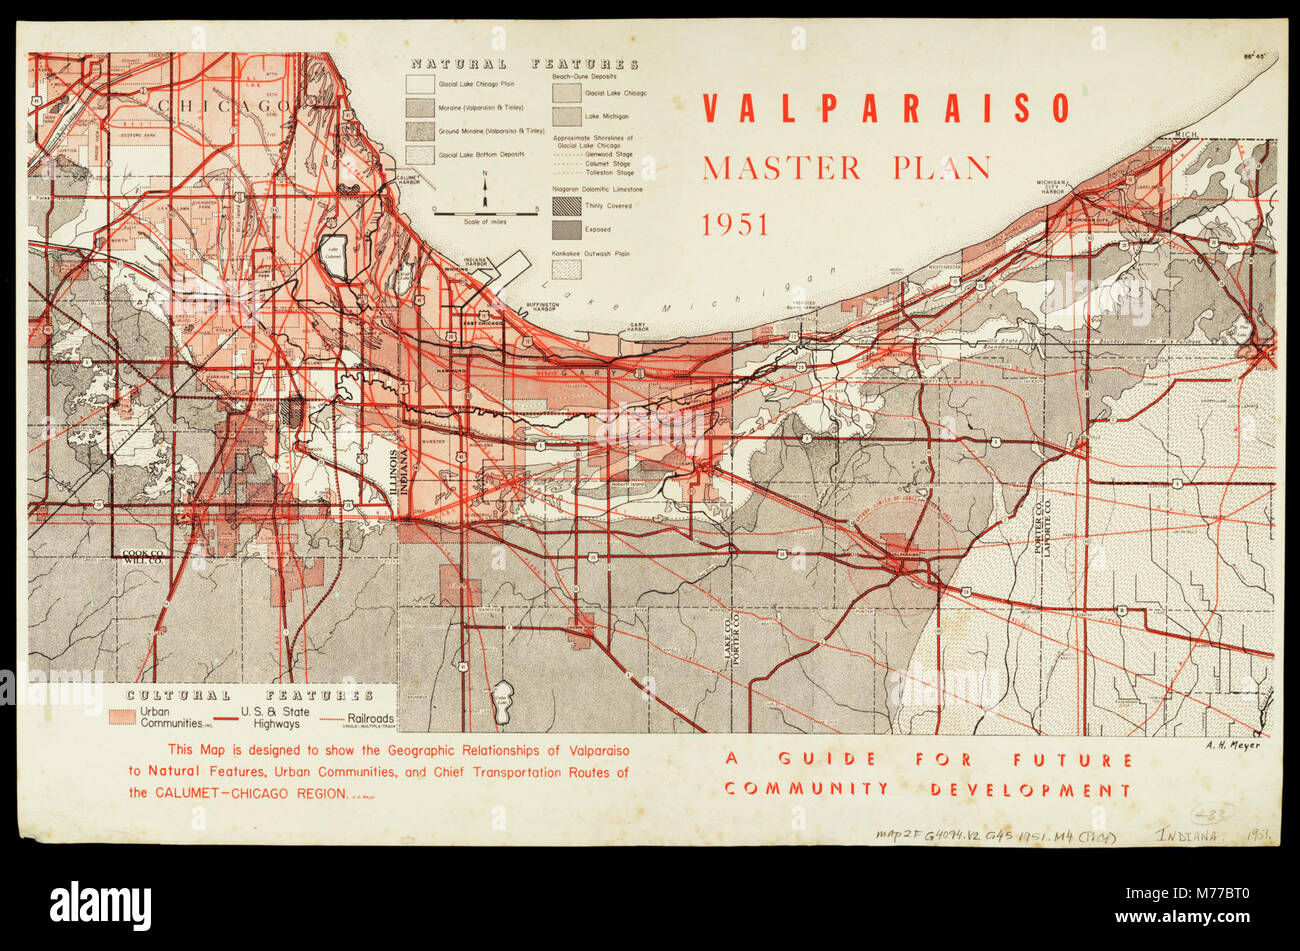 Valparaiso master plan, 1951 (NBY 1761) Stockfoto